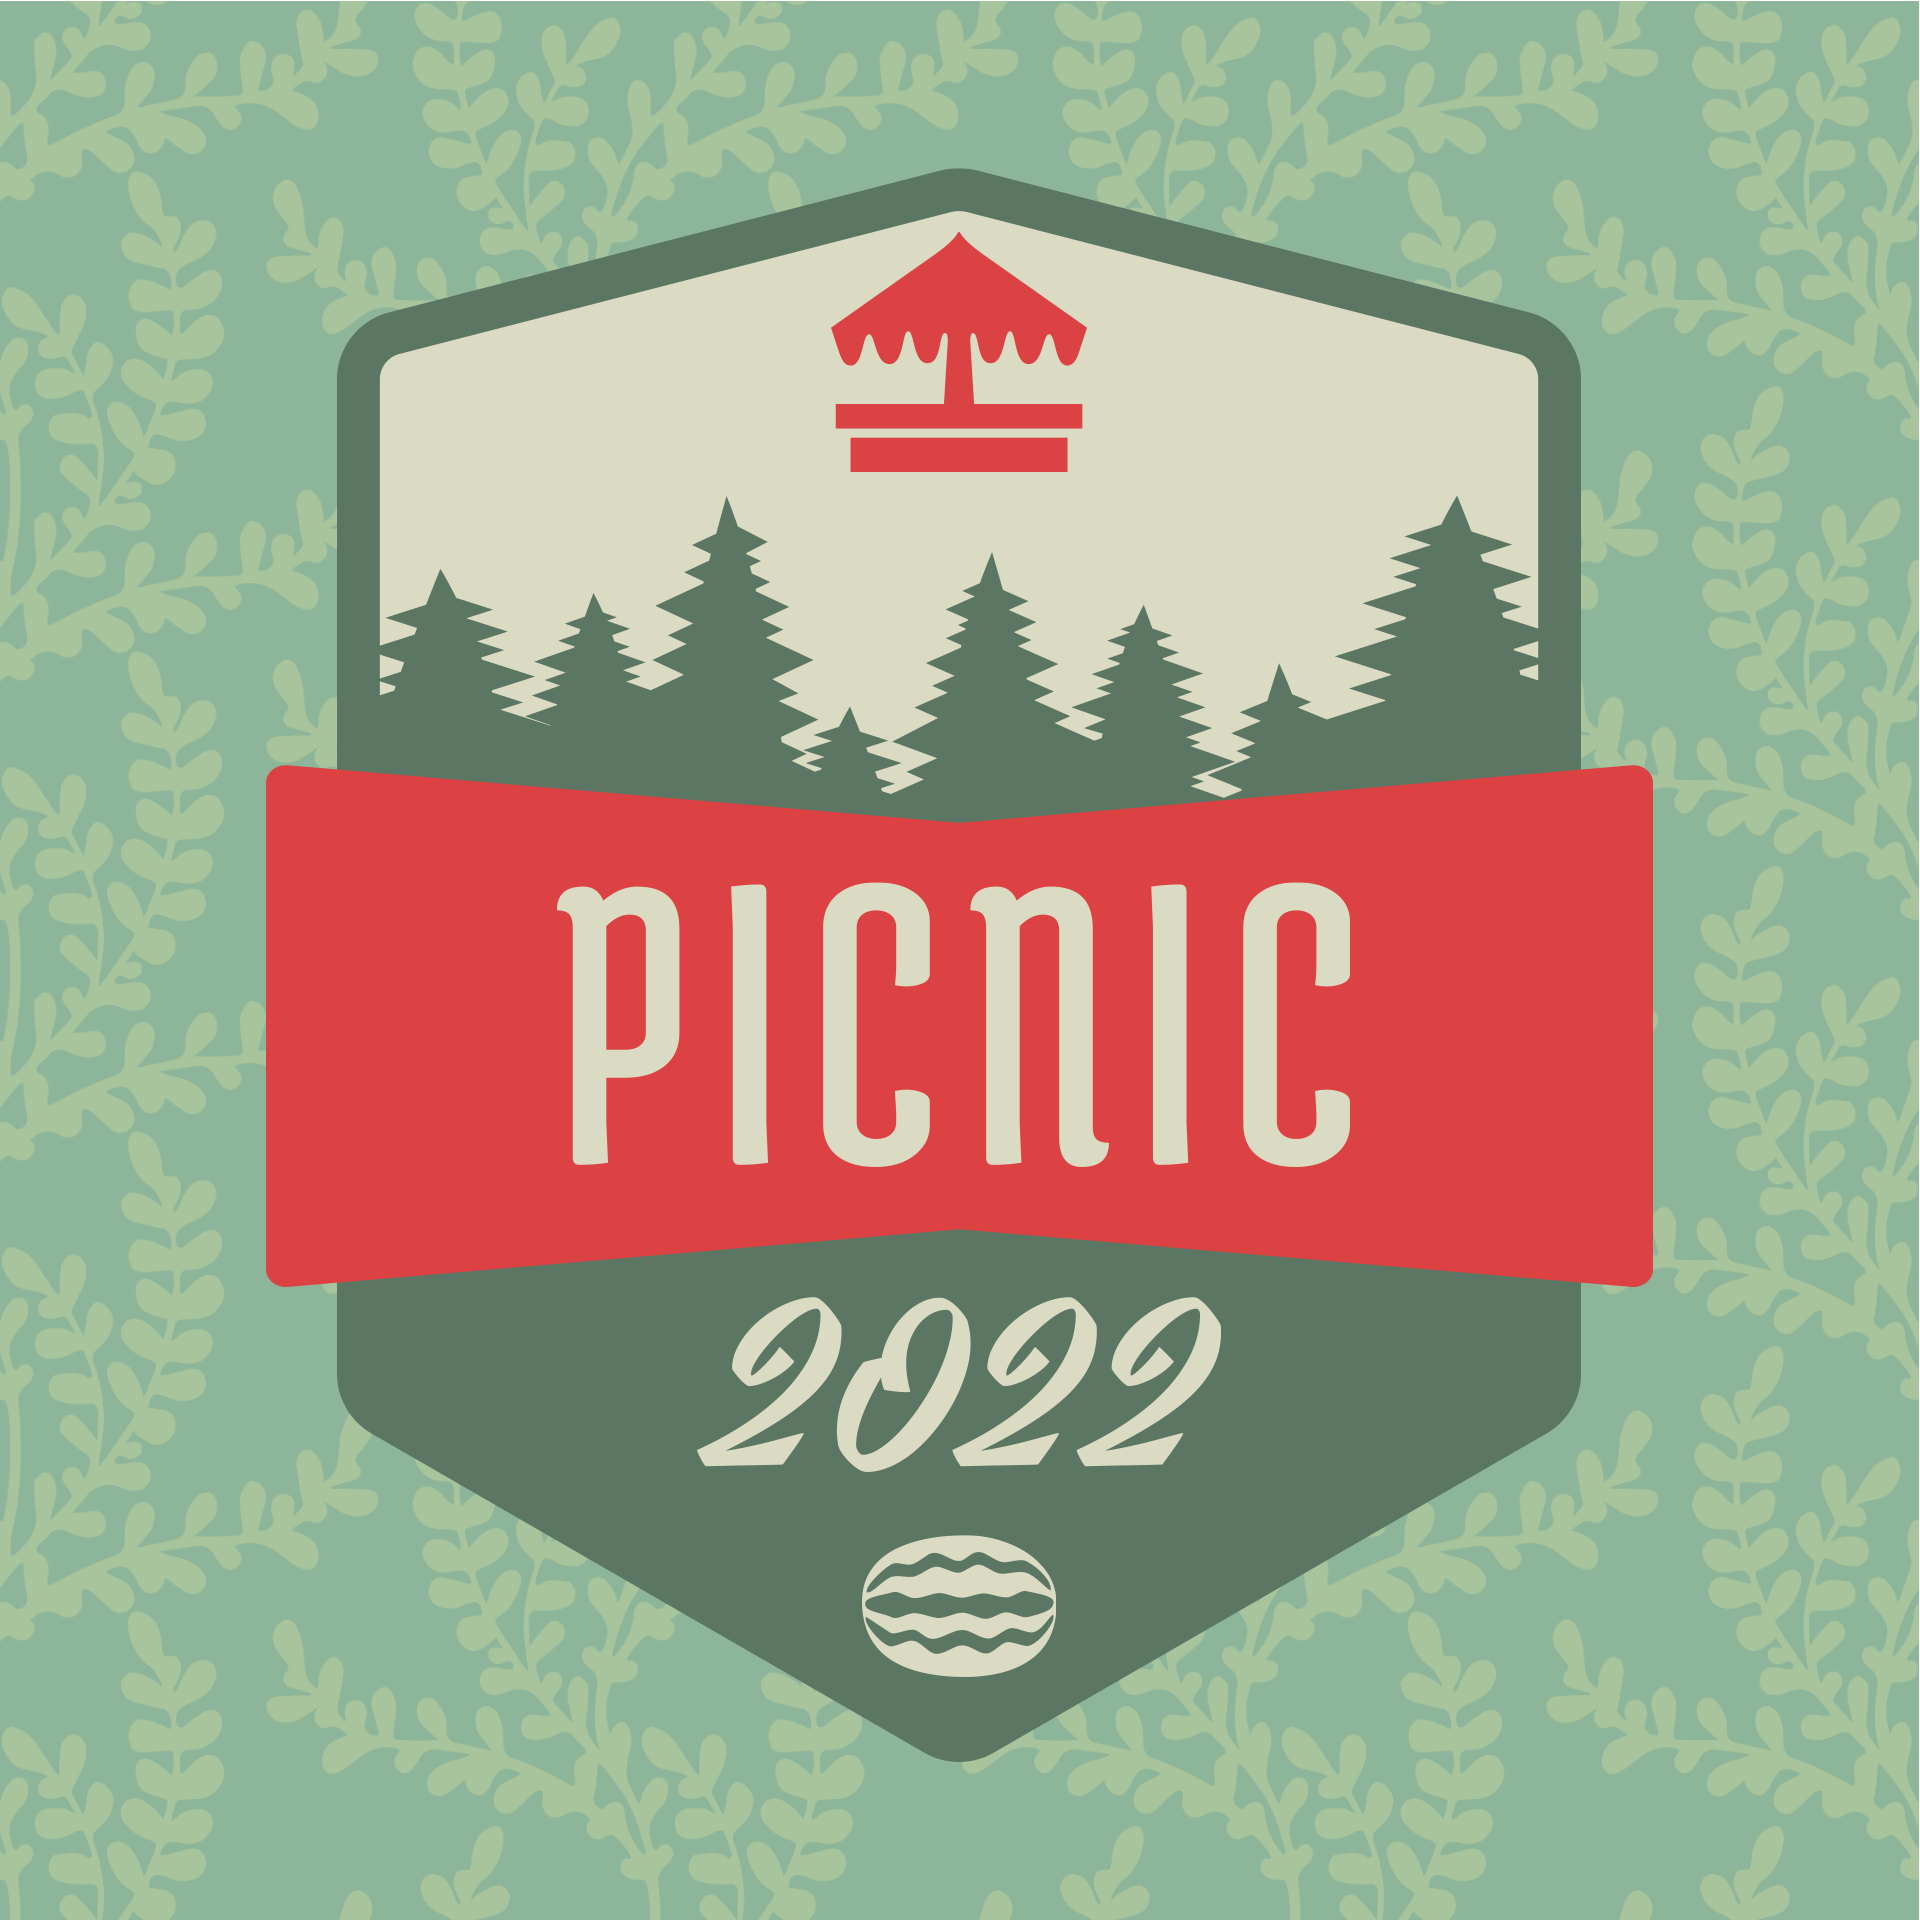 WCCPAAA Annual Picnic 2022